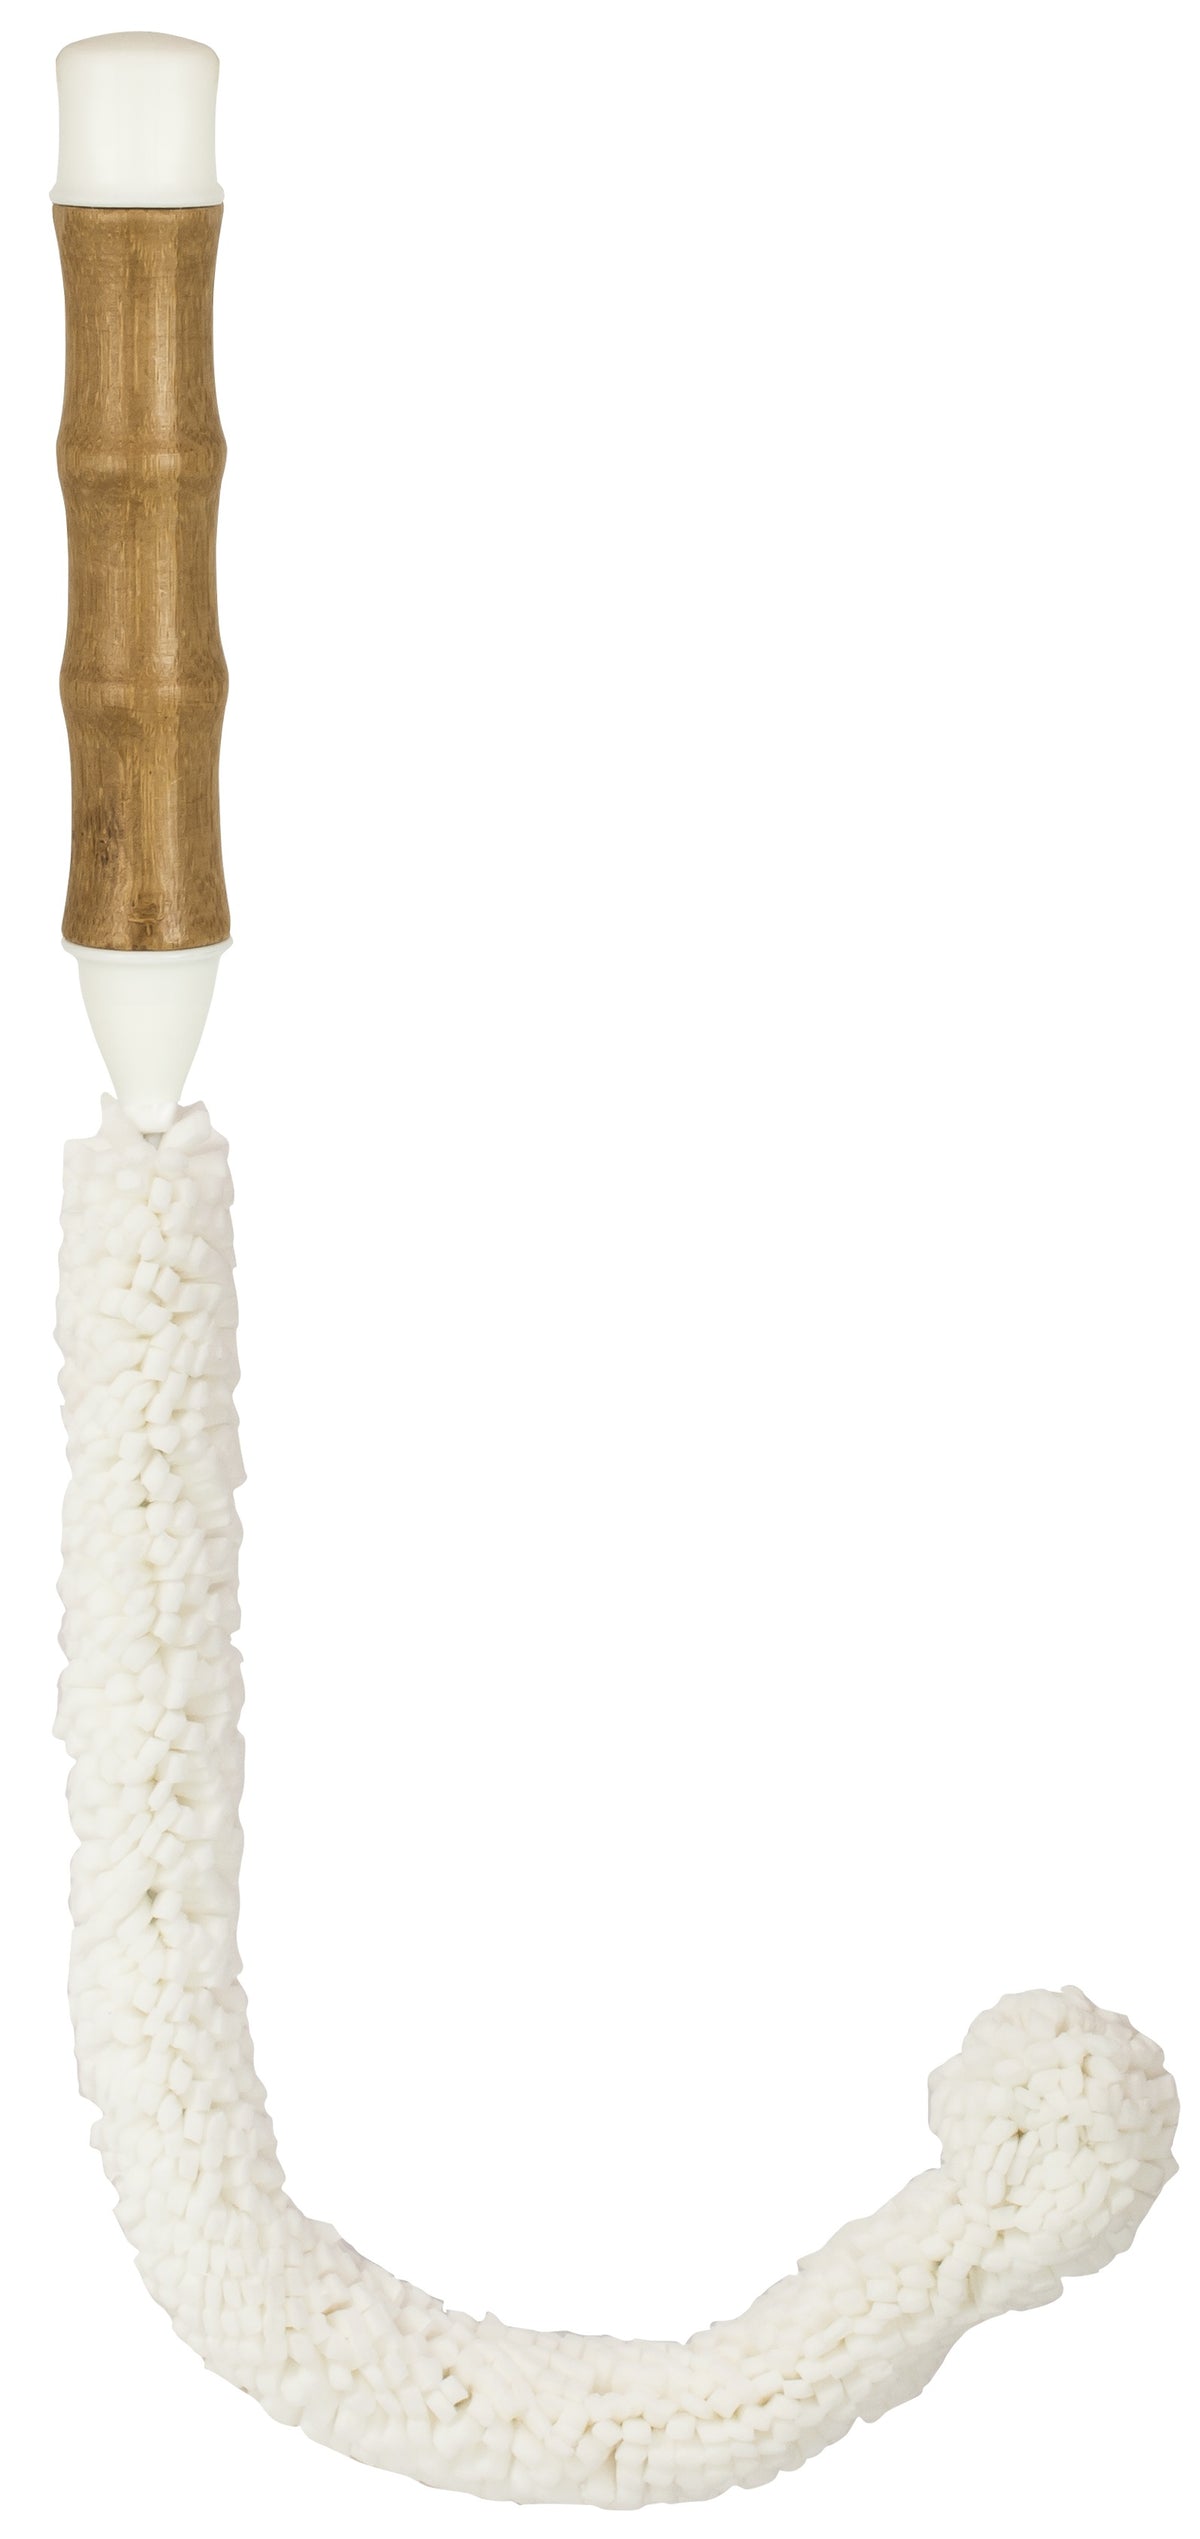 Harold Import 42013 Decanter Brush, Bamboo/Foam